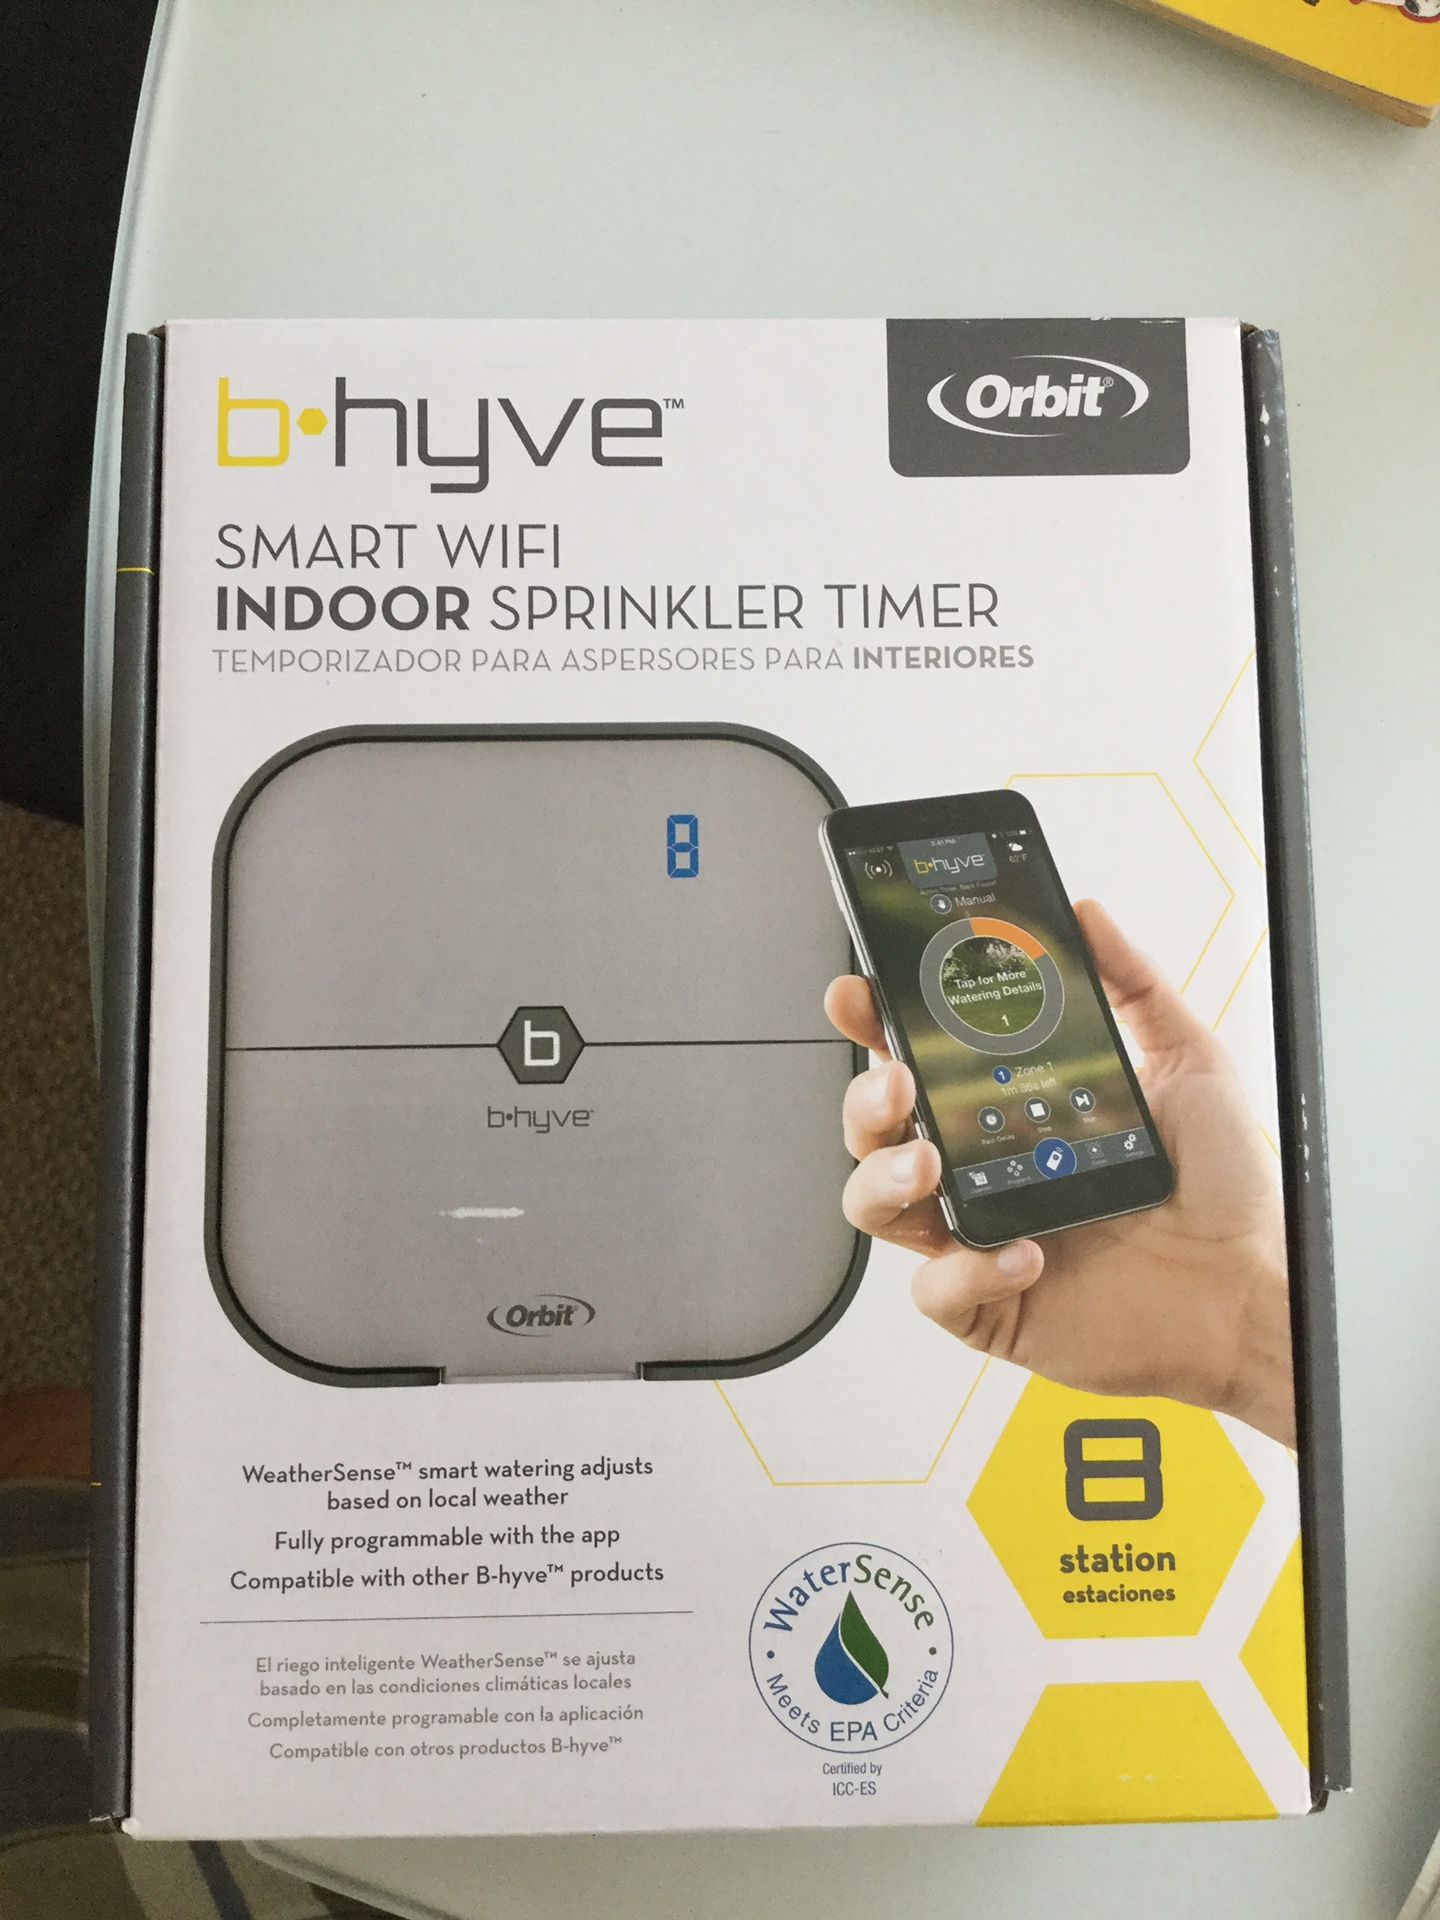 Orbit B-hyve smart WiFi indoor sprinkler timer